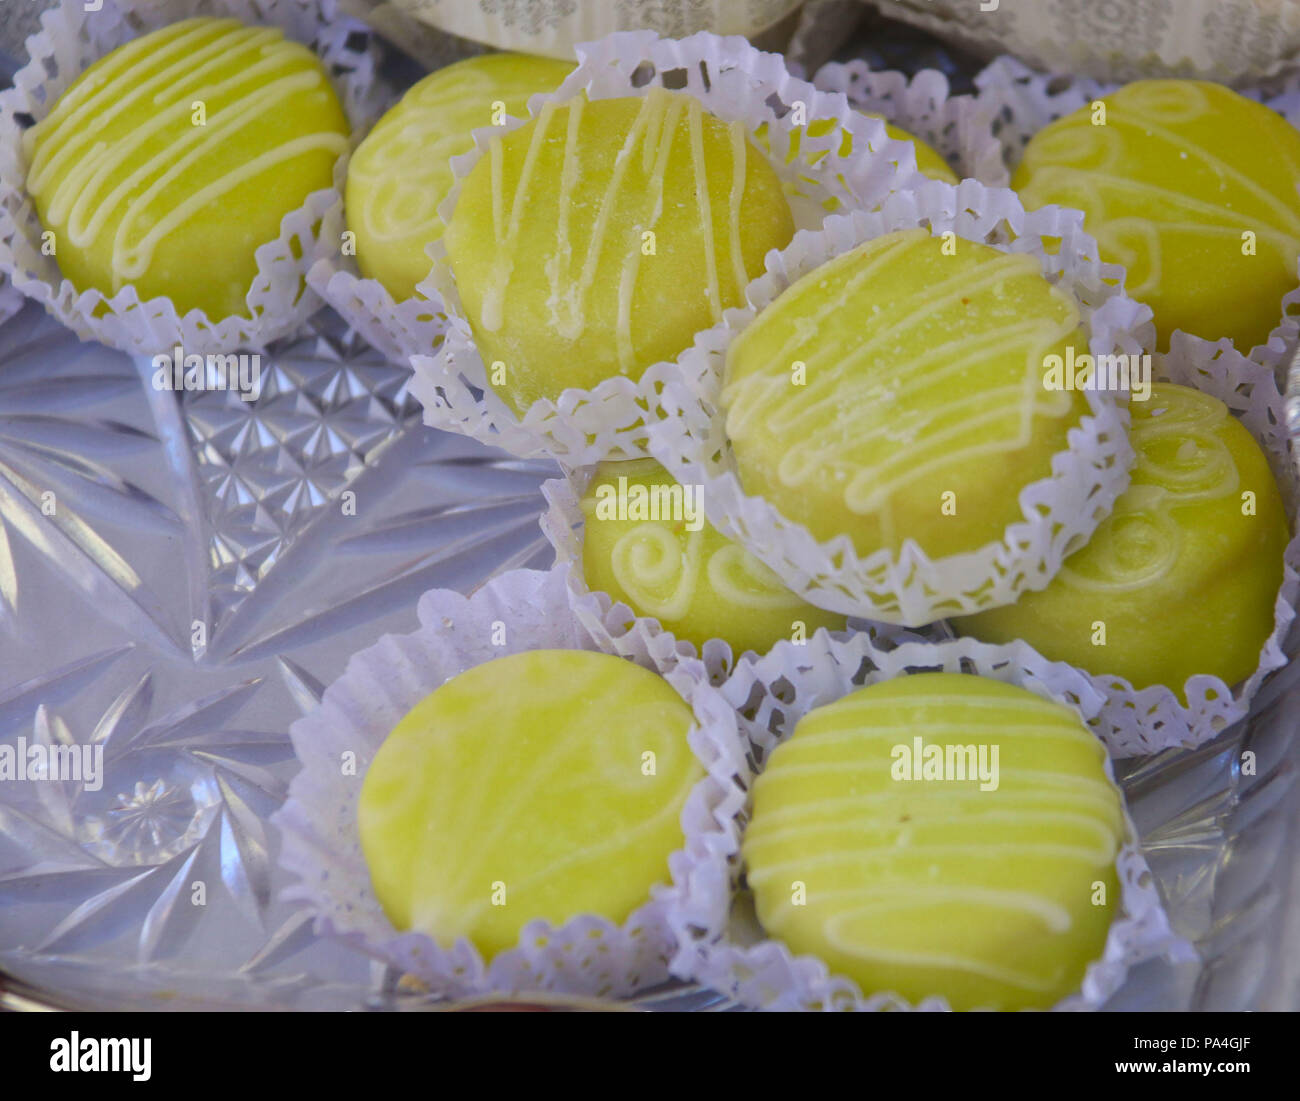 M'khabez, klassische Algerischen verglaste Almond cookies Stockfoto